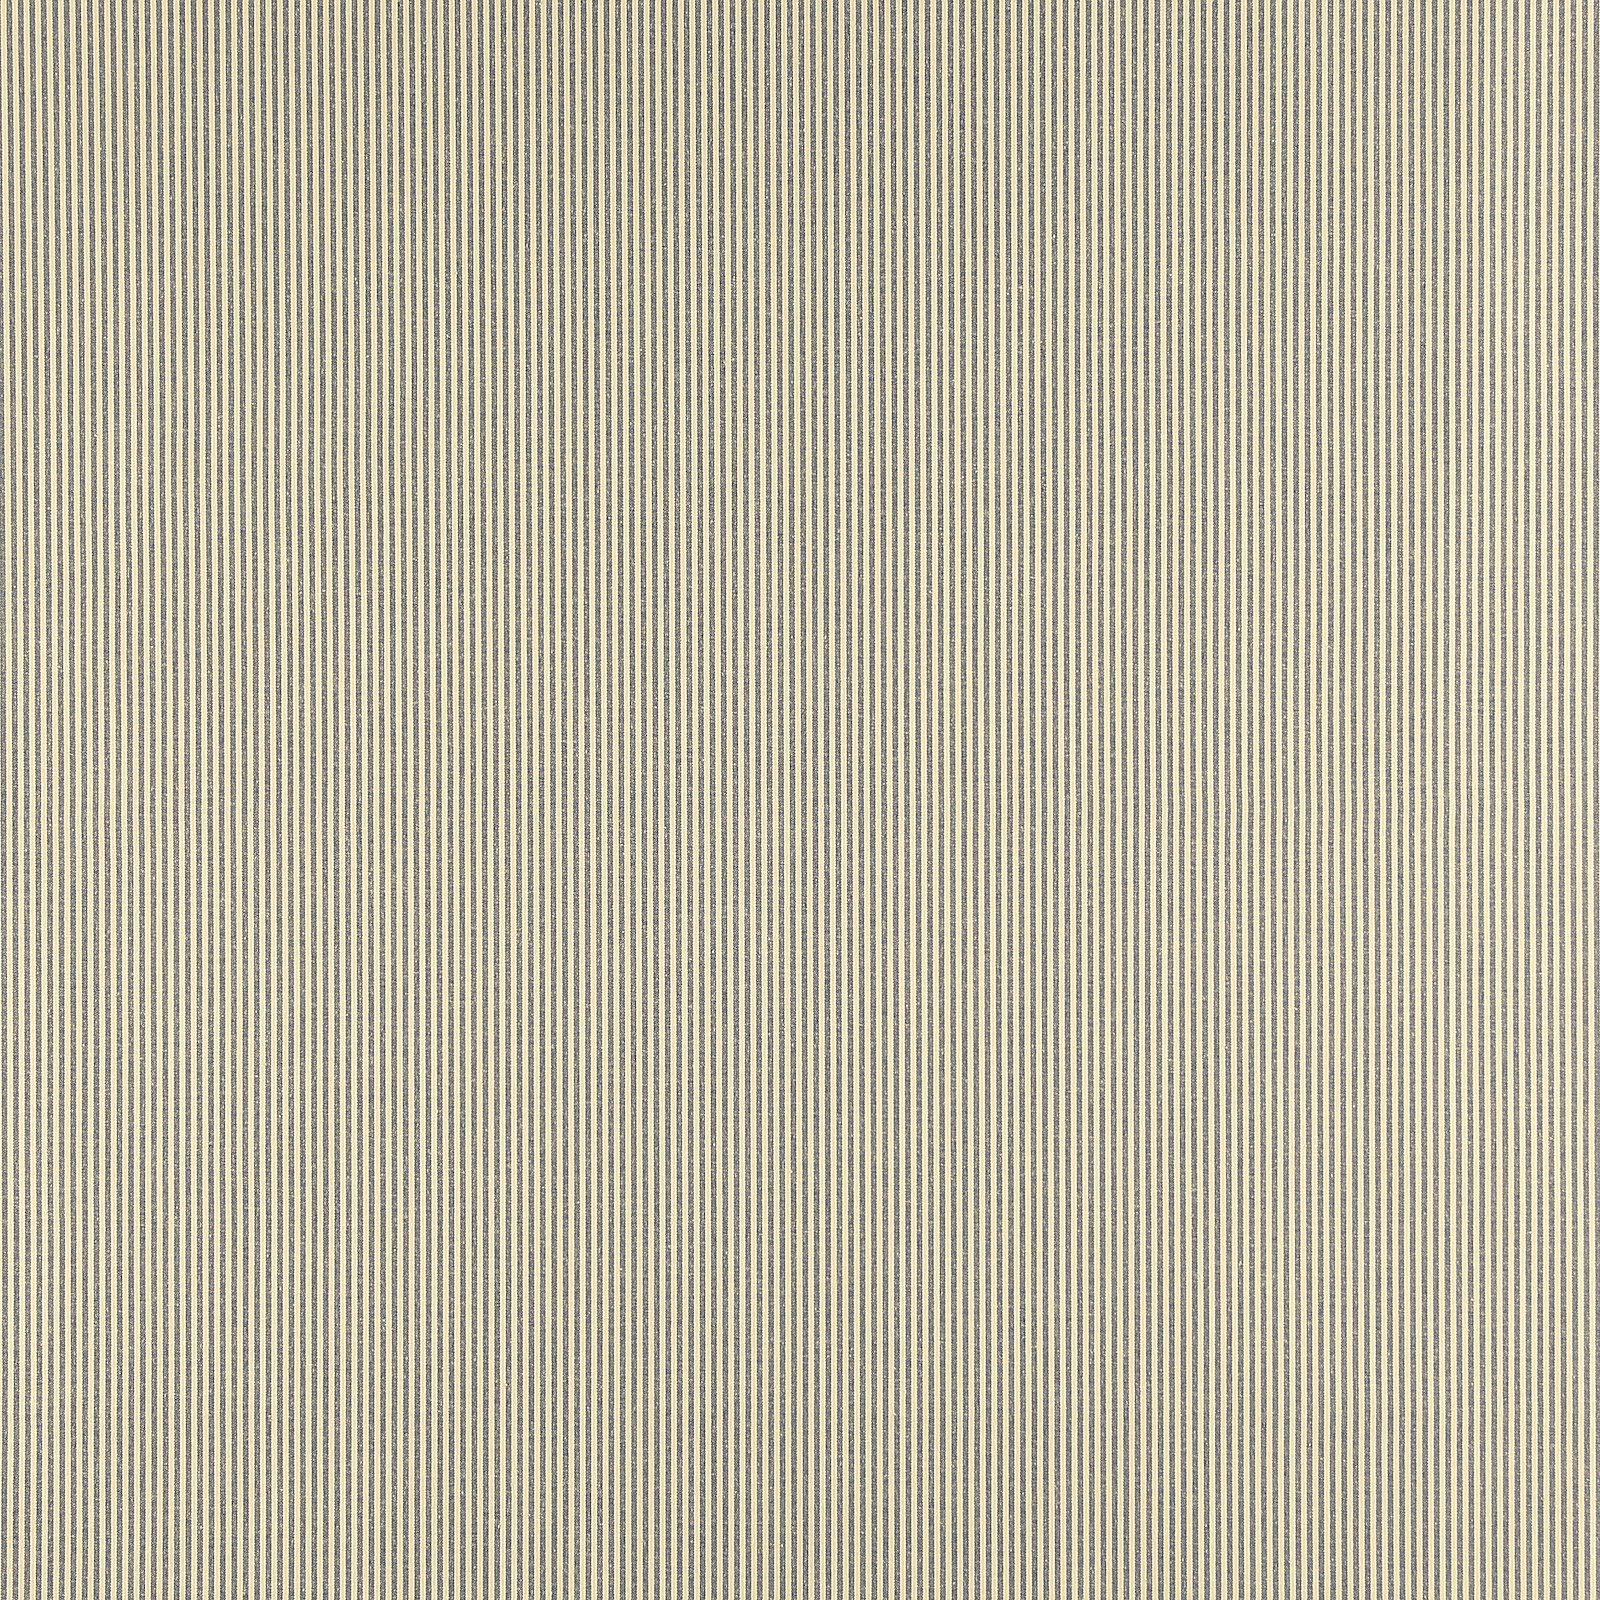 Yarn dyed grey stripe 821823_pack_sp